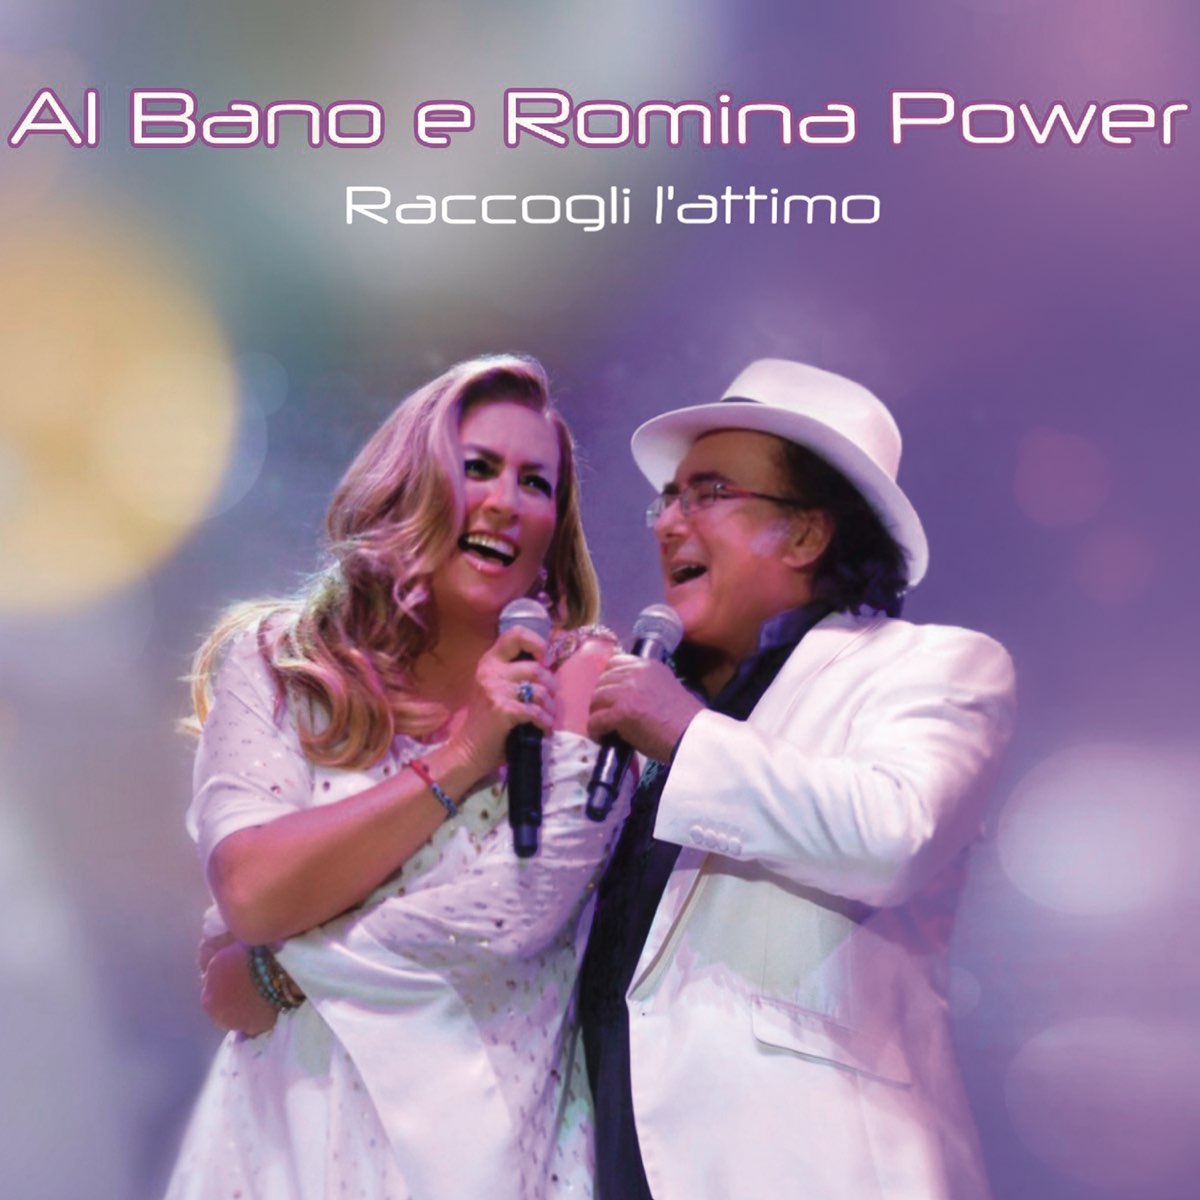 Raccogli l'attimo - Single by Al Bano Carrisi & Romina Power on Apple Music